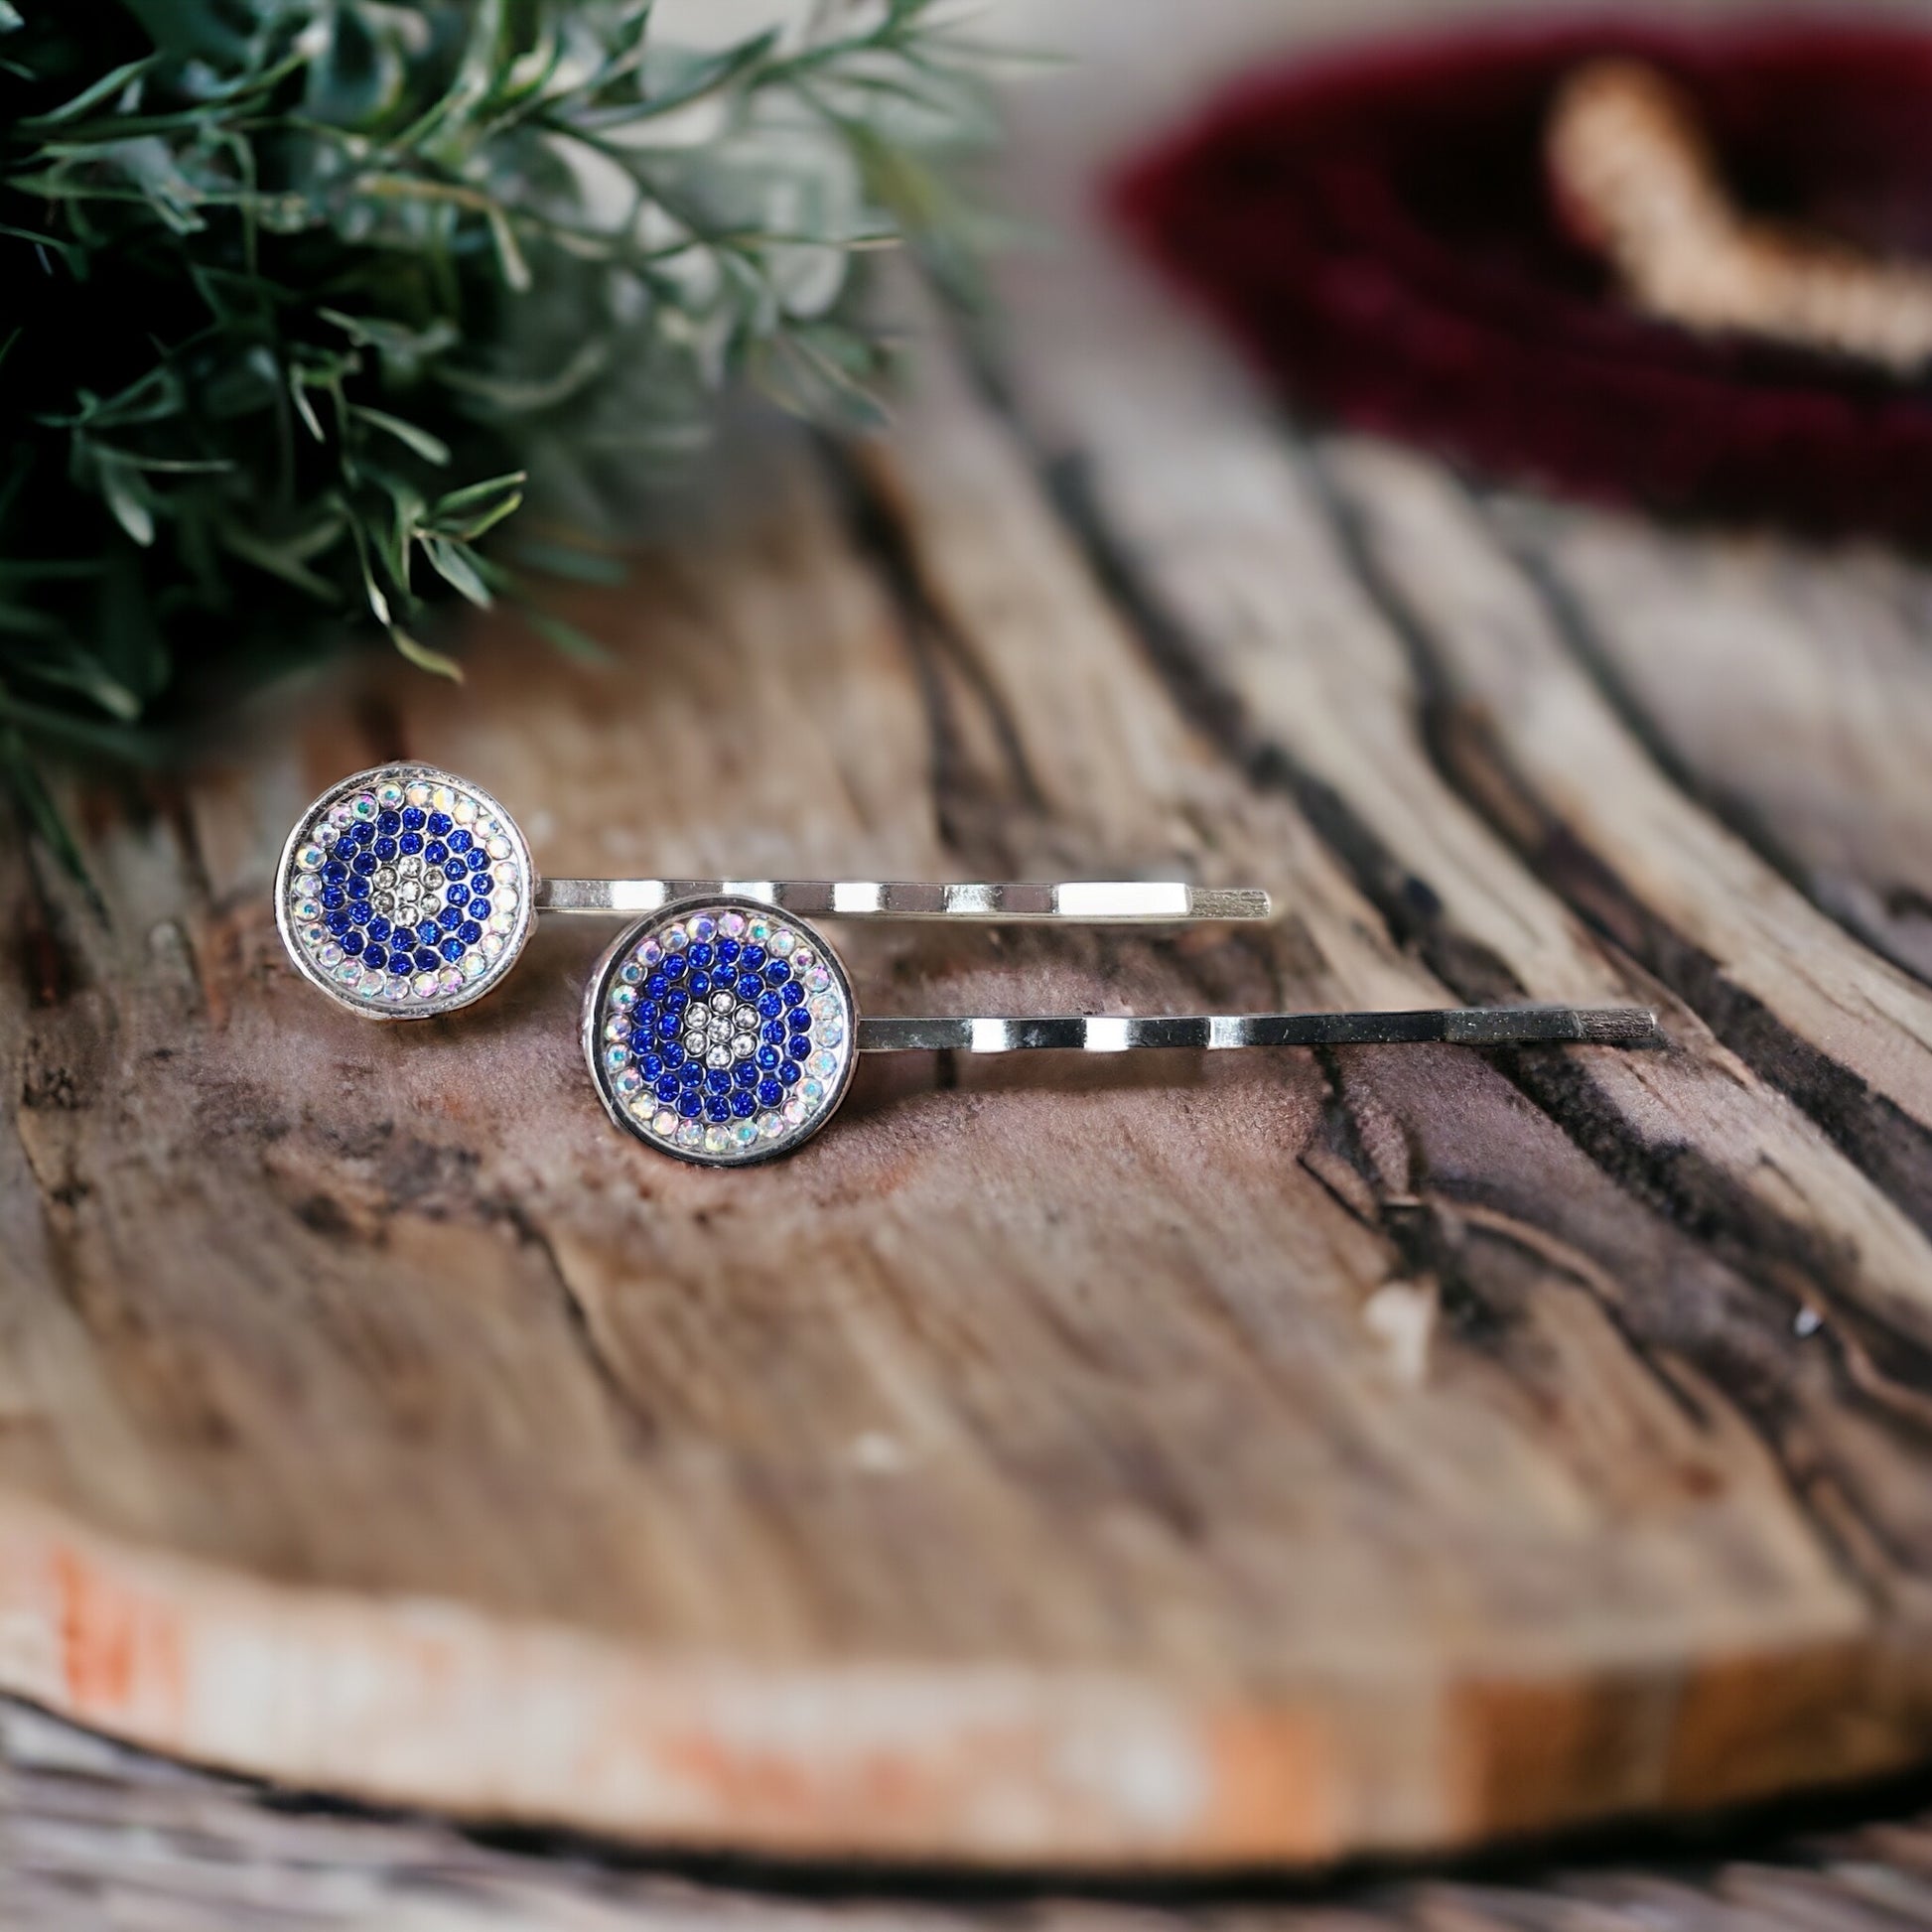 Blue Rhinestone Round Hair Pins - Decorative Bobby Pins for Women - Elegant Cobalt Blue Crystal Hair Accessory